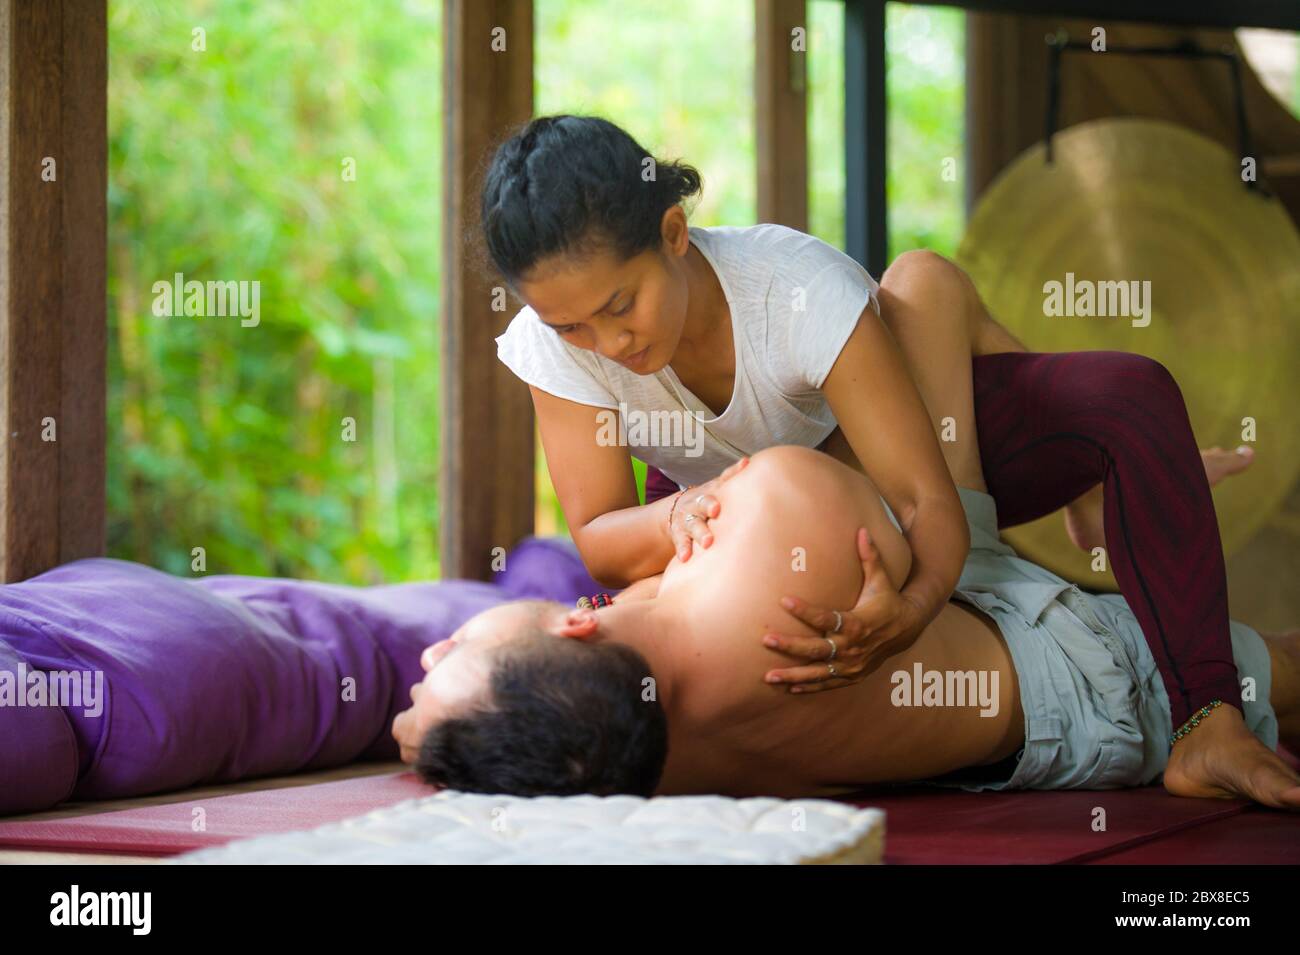 Exortic Massage